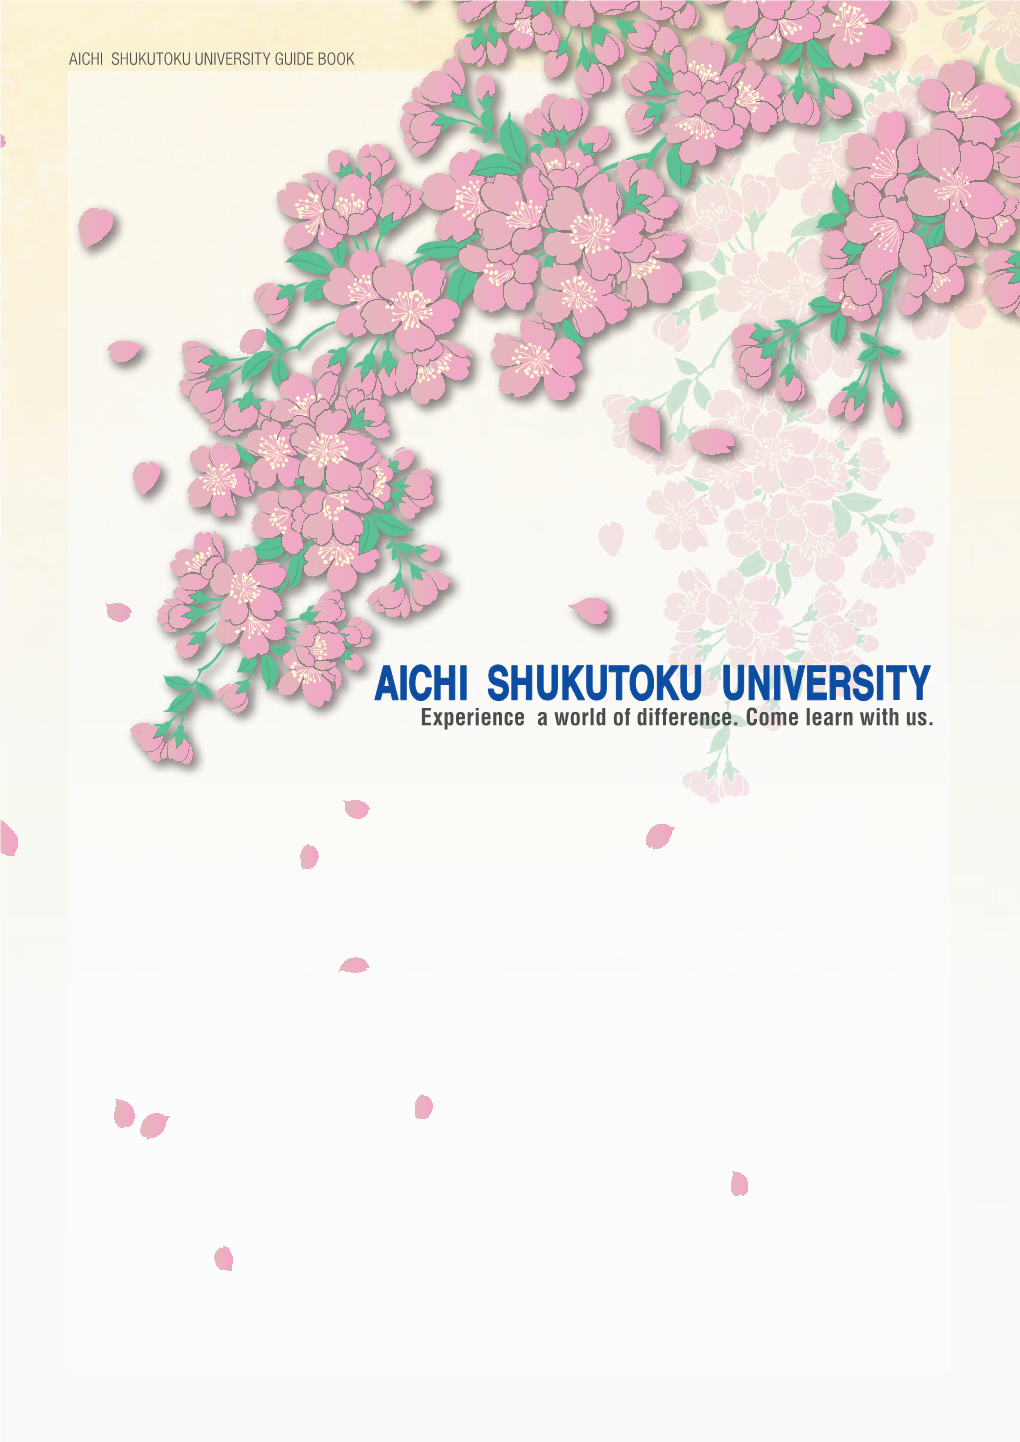 The History of Aichi Shukutoku University